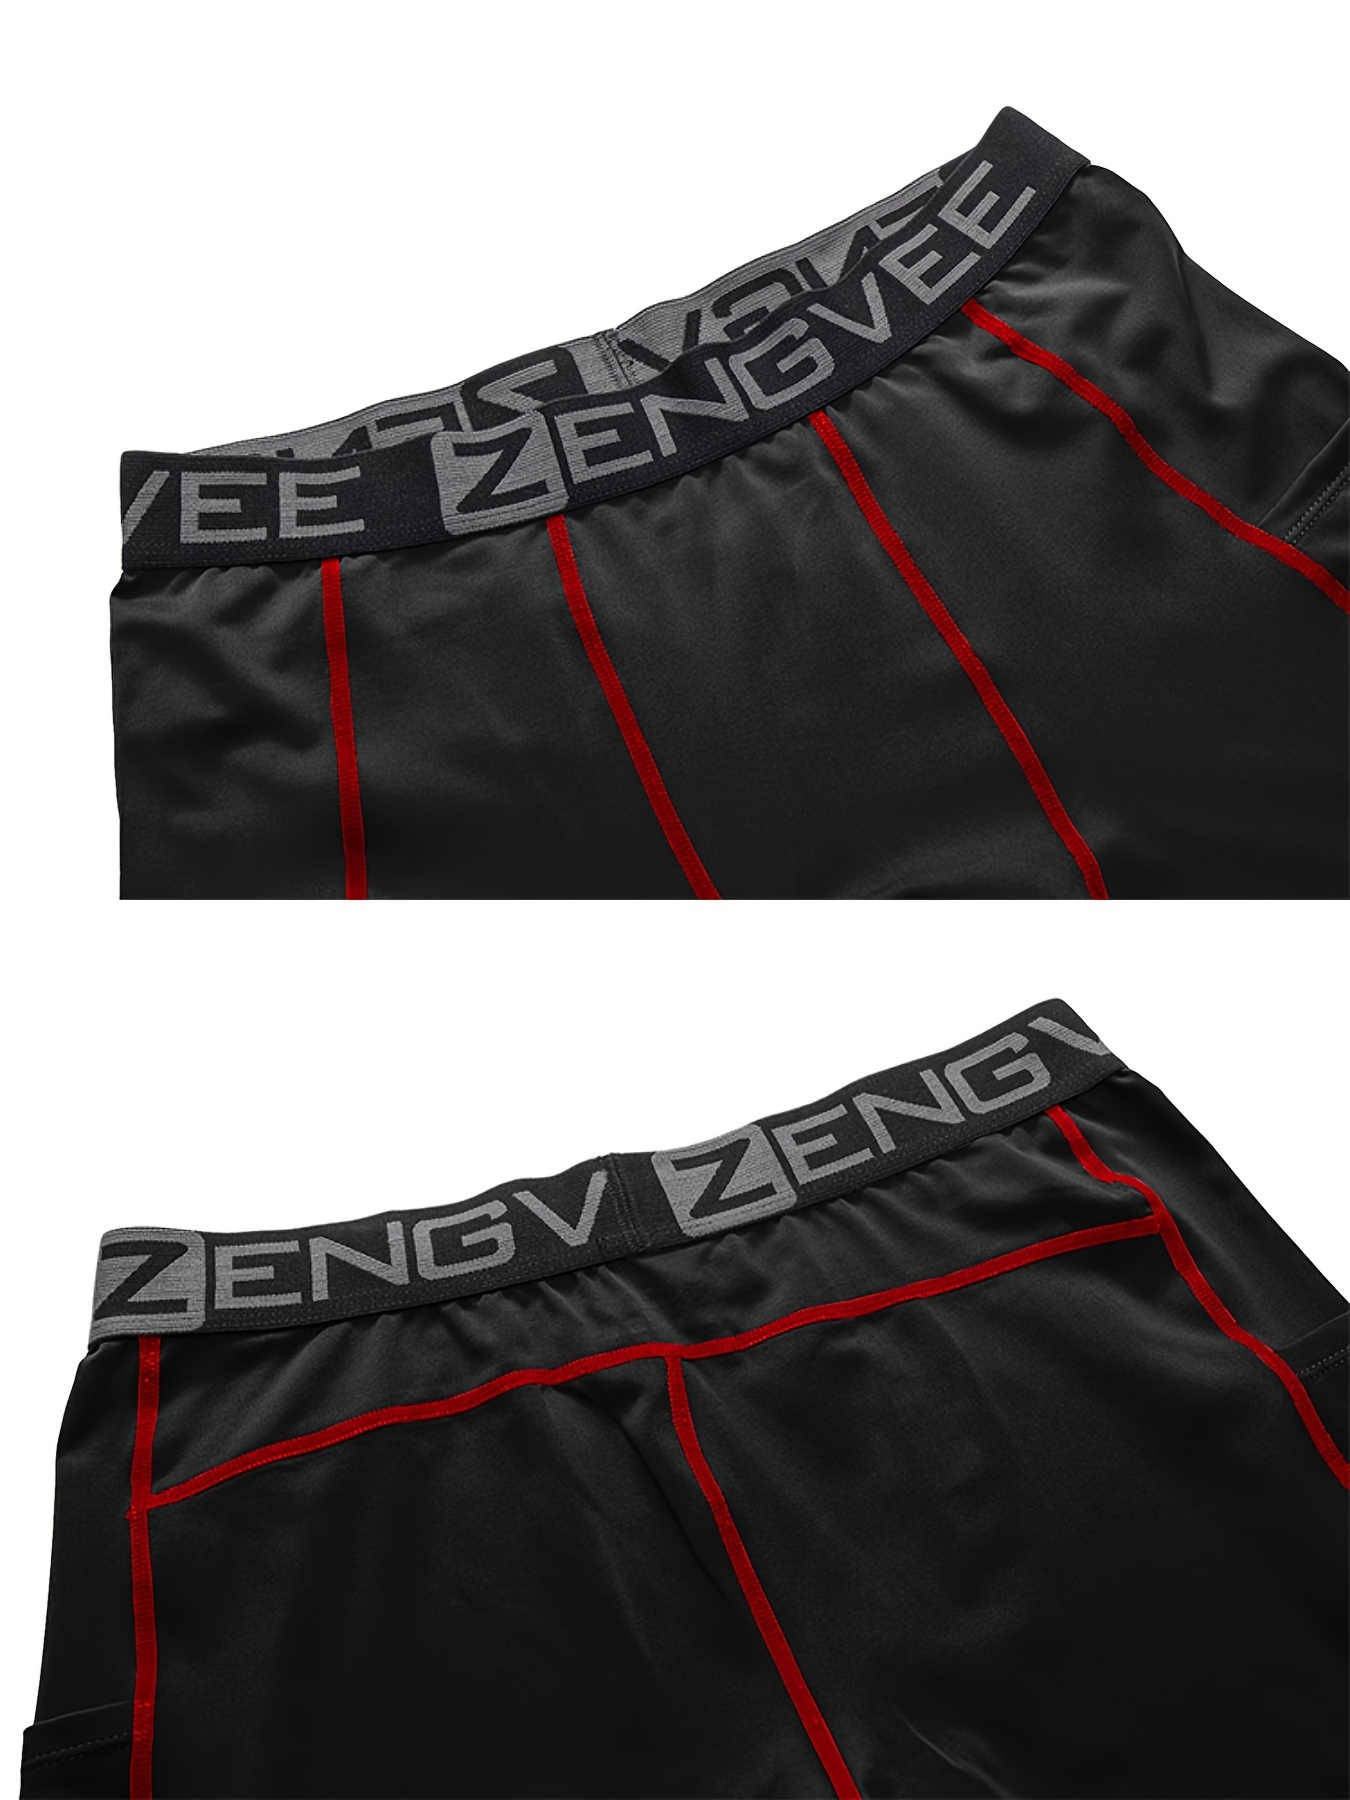 ZENGVEE Compression Shorts Men 3 Pack with Pocket Running Short Mens Gym  Swimming Yoga Climbing Workout Cycling running 03*grey Large